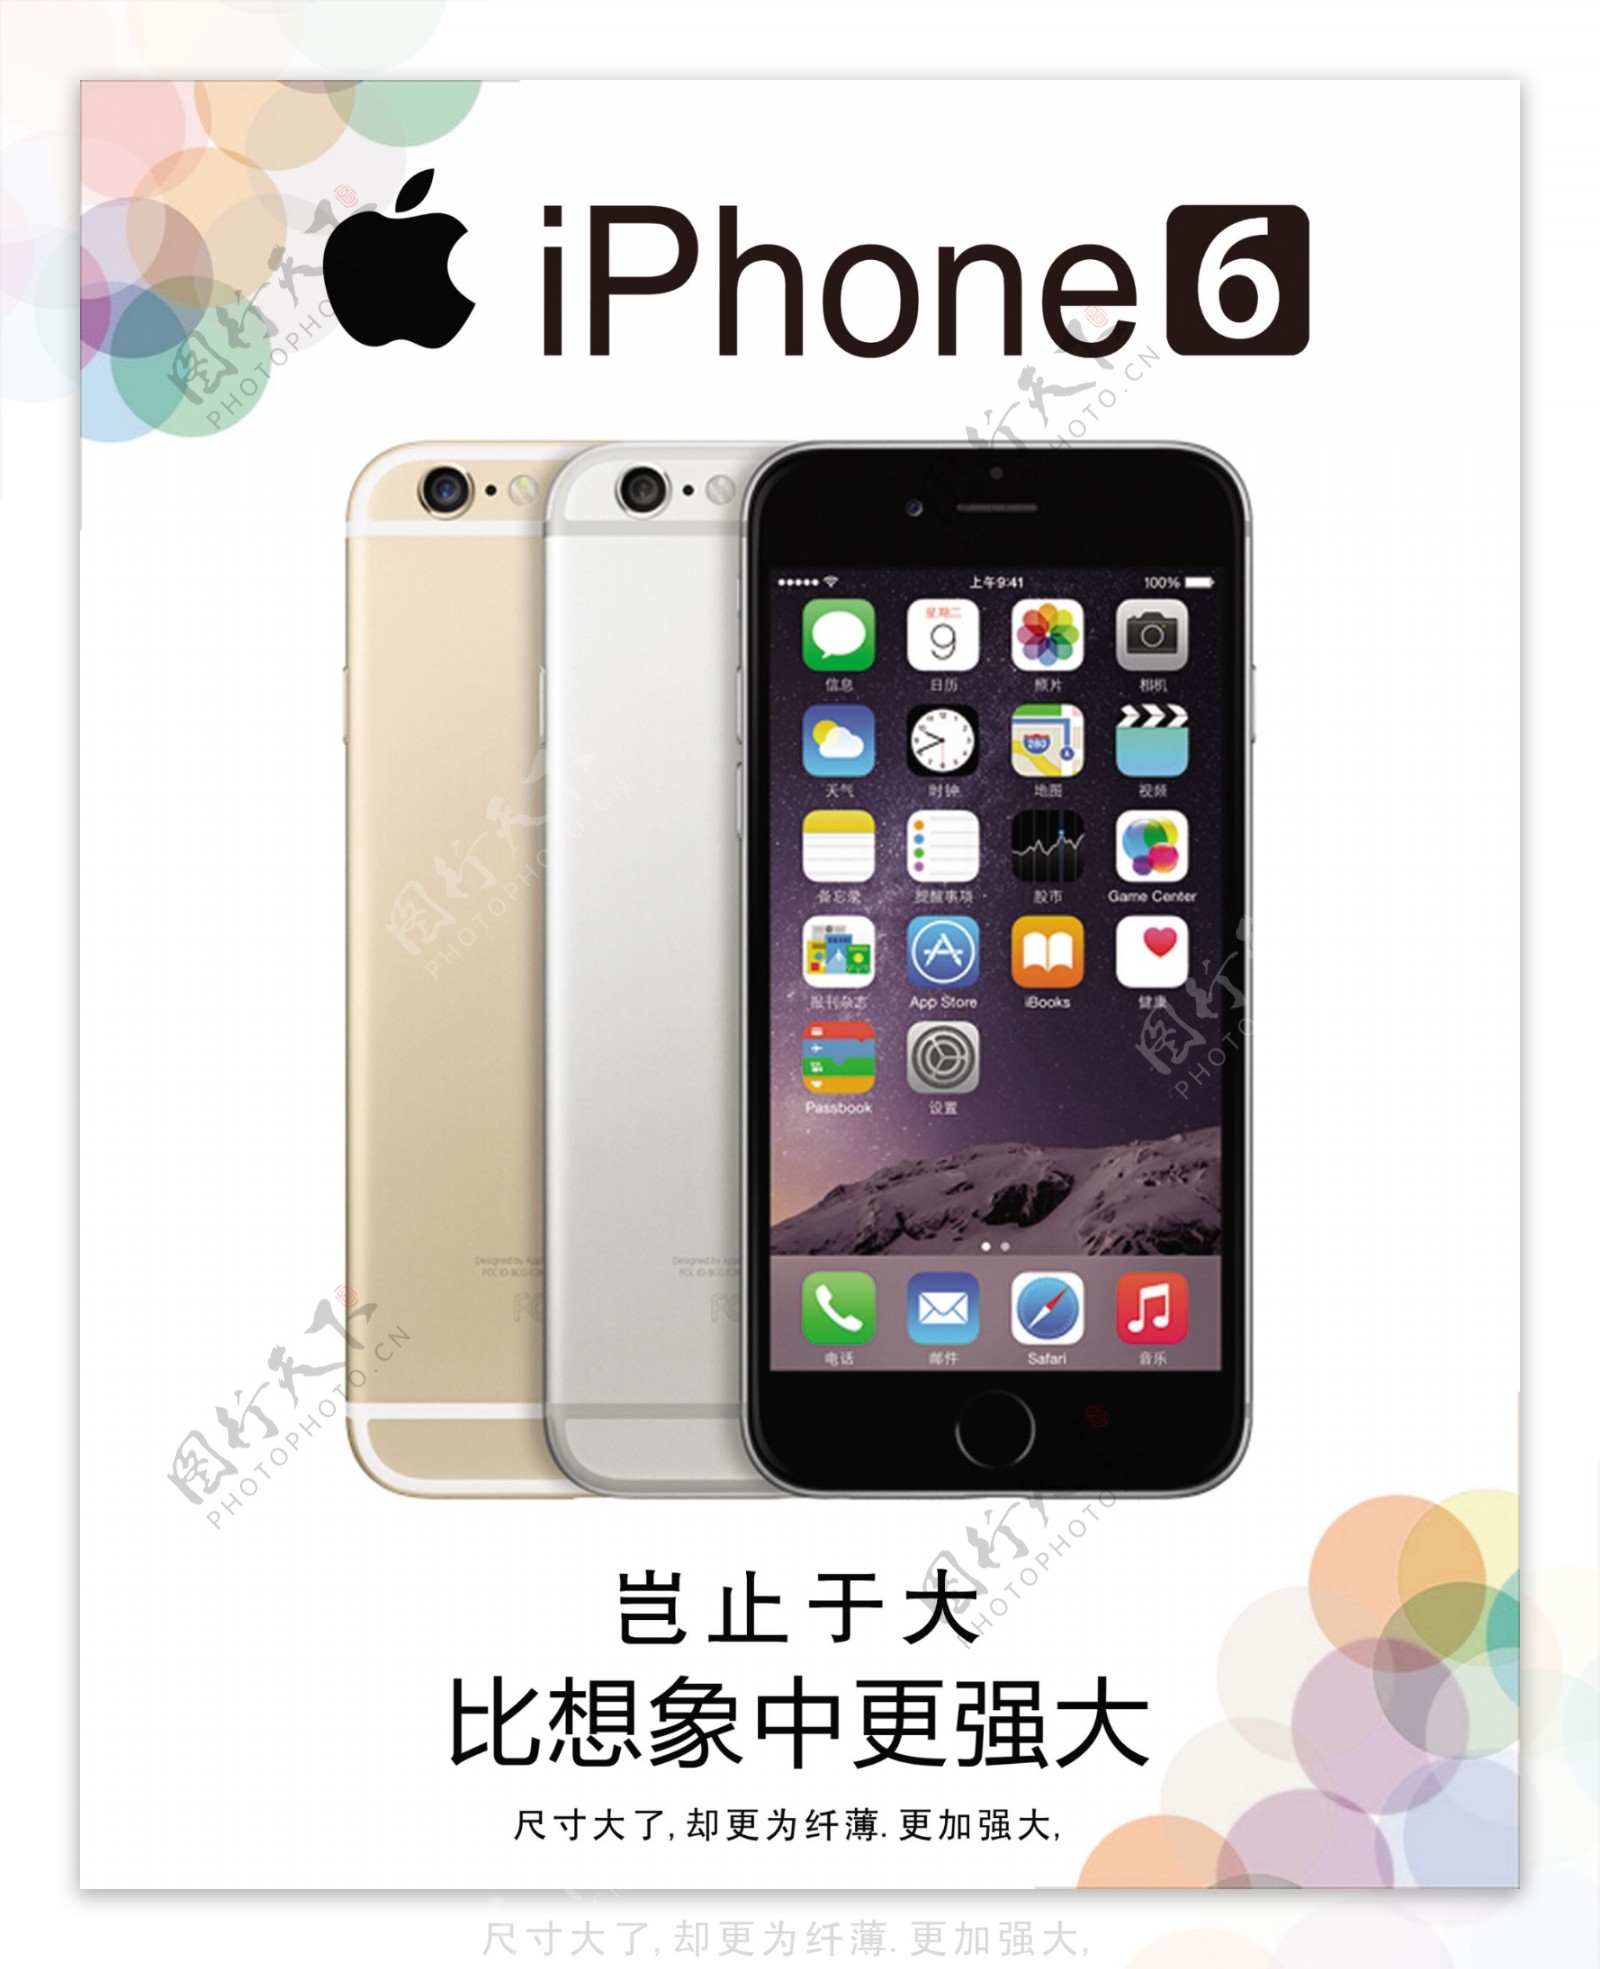 iphone6展板图片